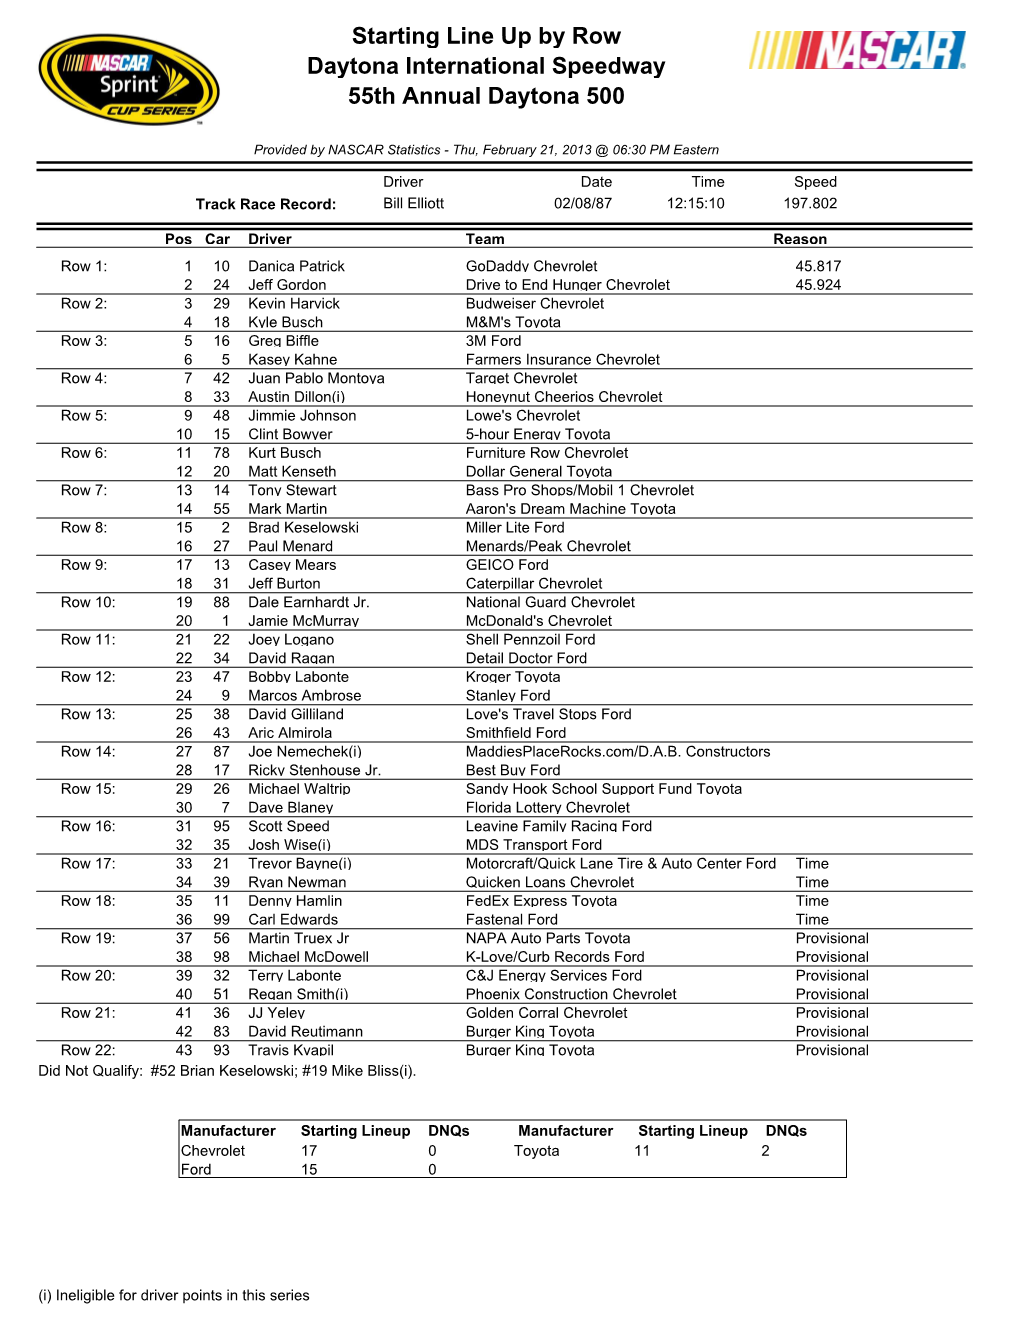 Starting Line up by Row Daytona International Speedway 55Th Annual Daytona 500